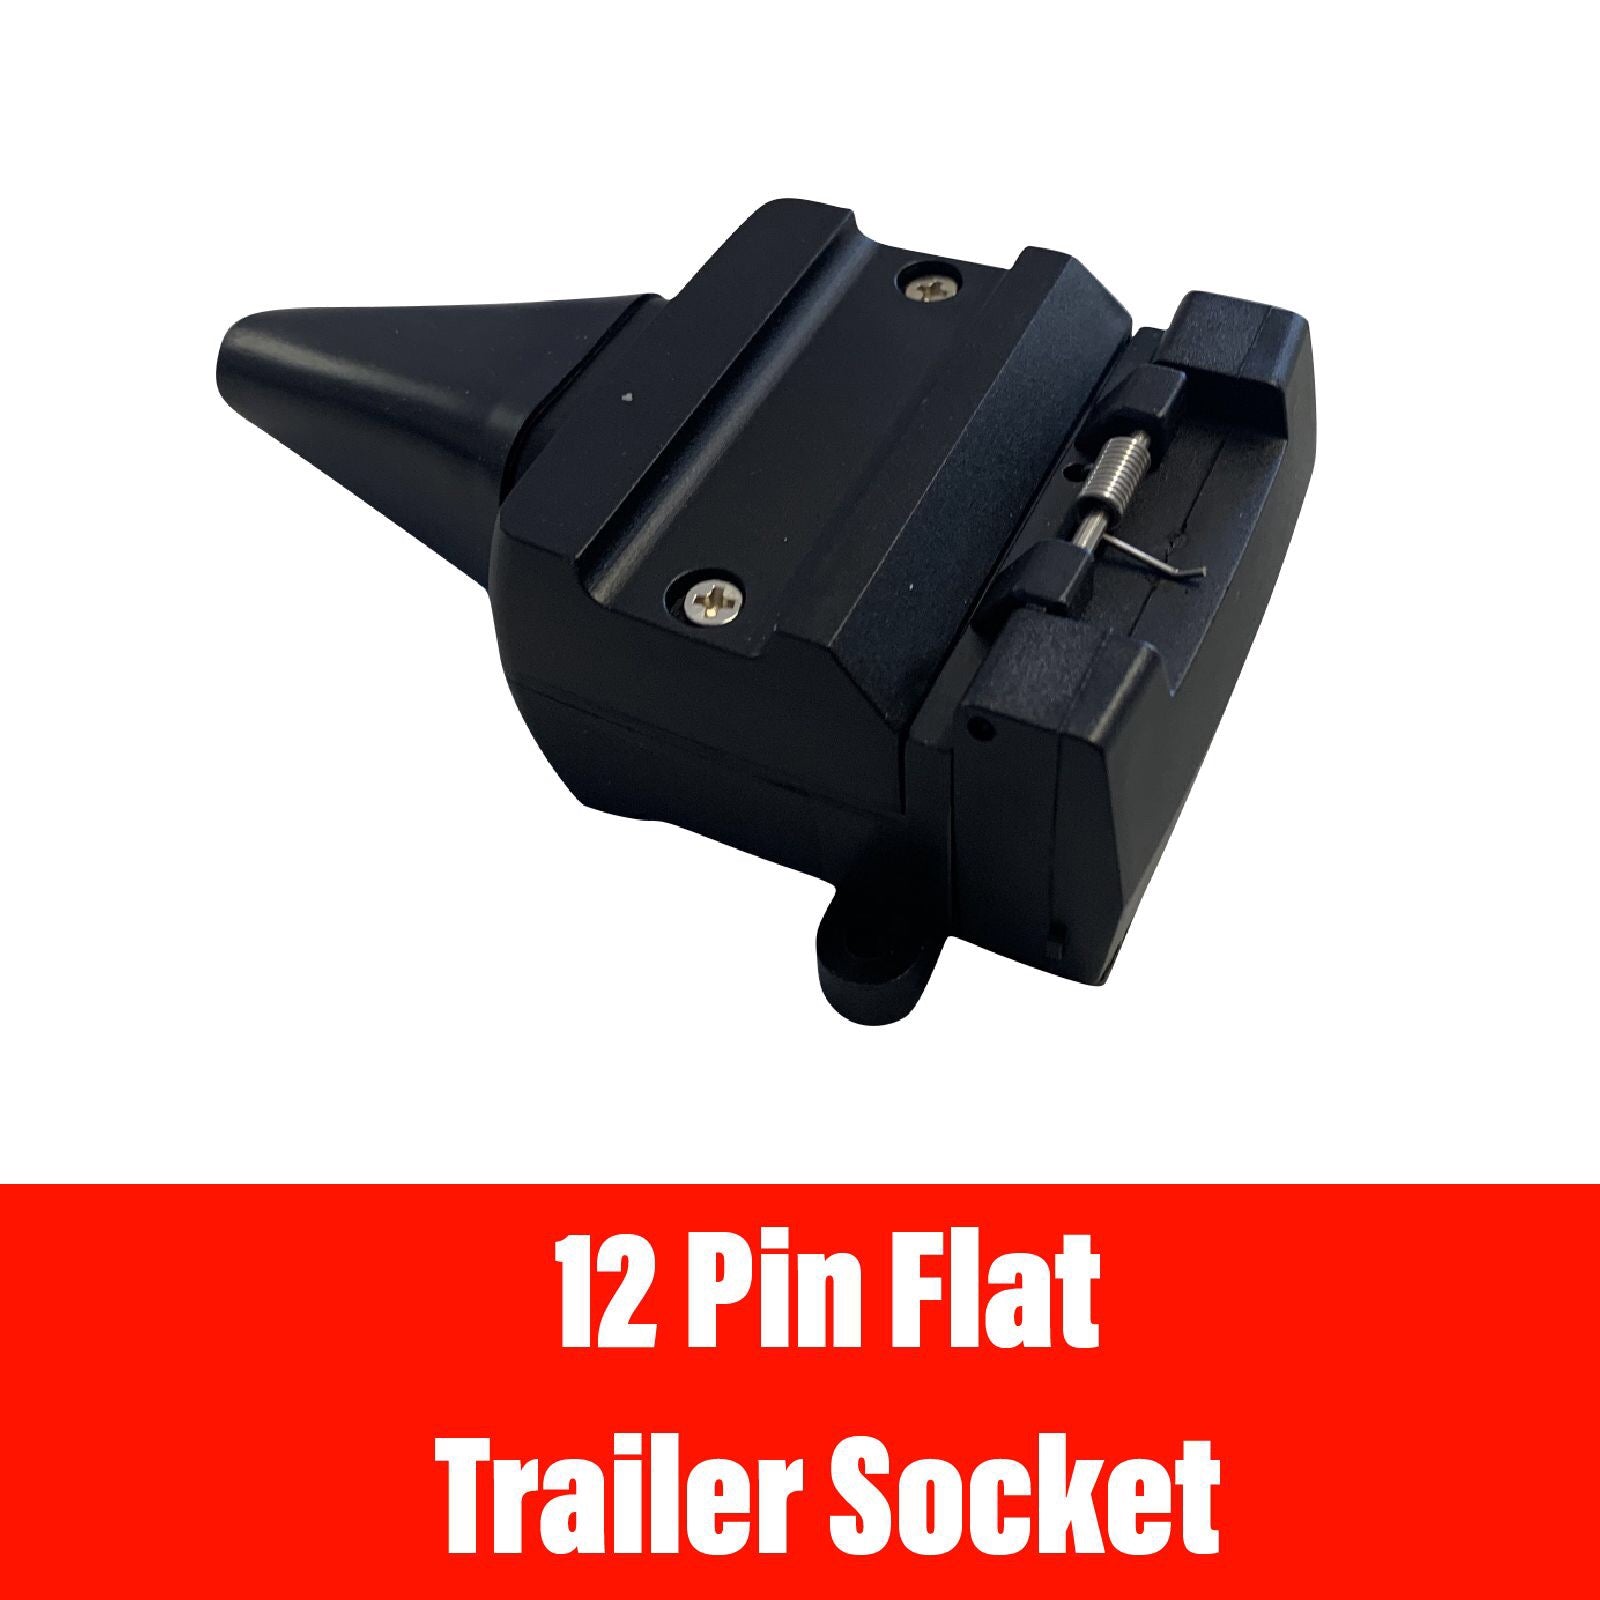 12 PIN FLAT TRAILER SOCKET